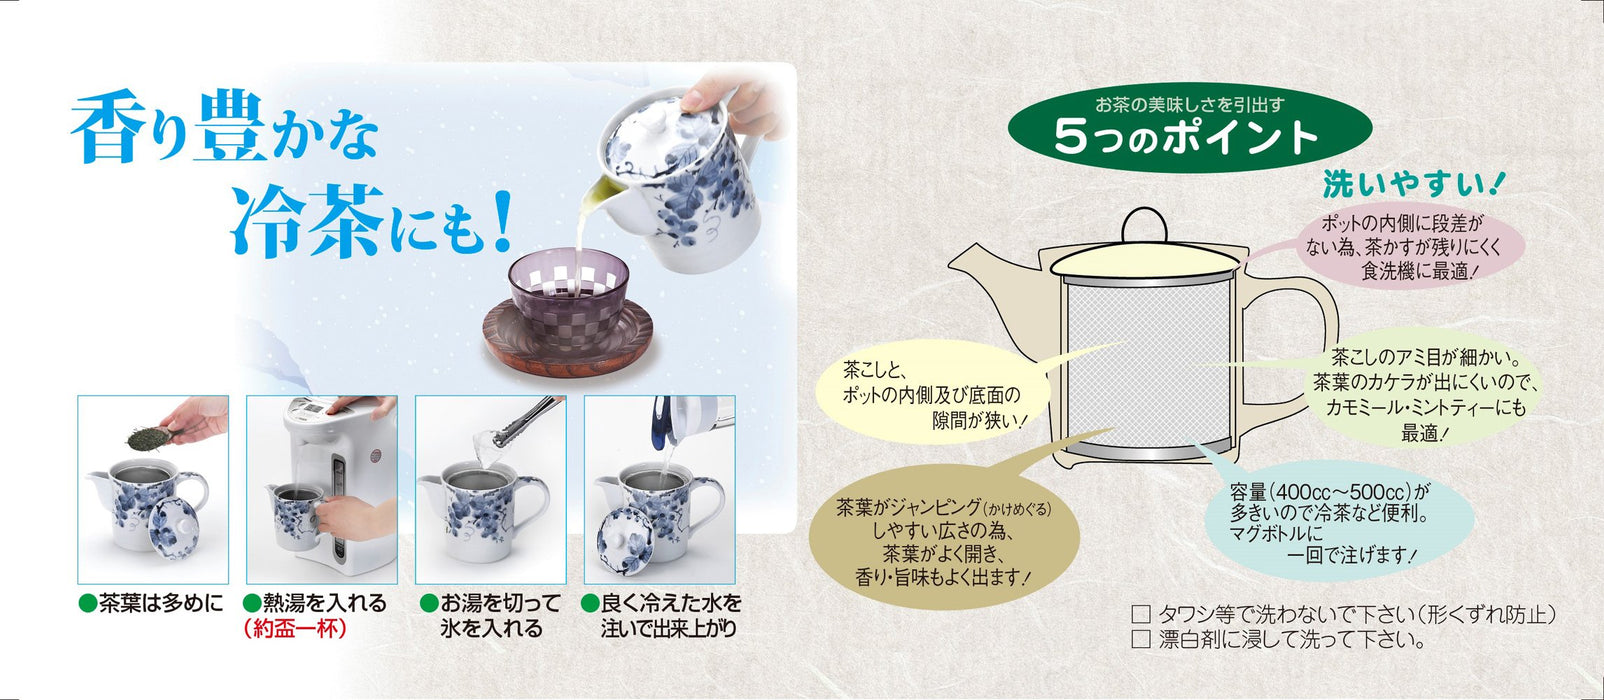 Itumi Pottery Seto Ware Hh Pot Yakijime 大號帶圓柱形濾茶器 042511 - 日本製造